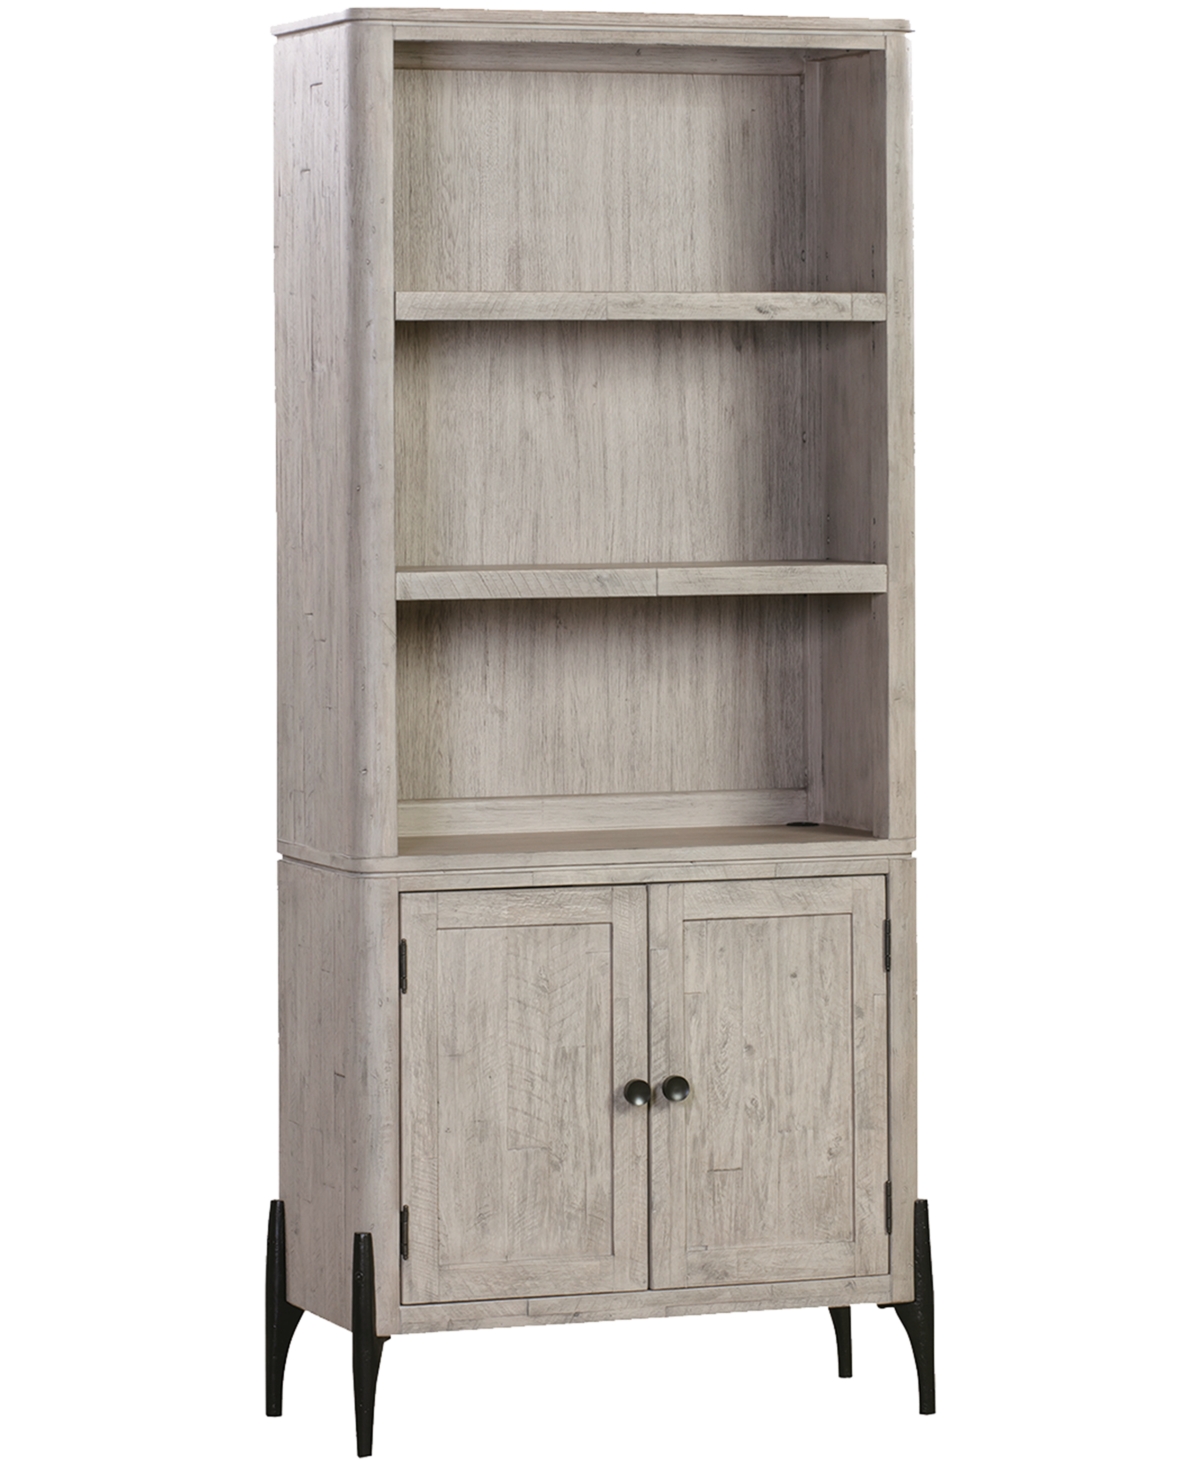 Furniture Zane Door Bookcase In Parchment